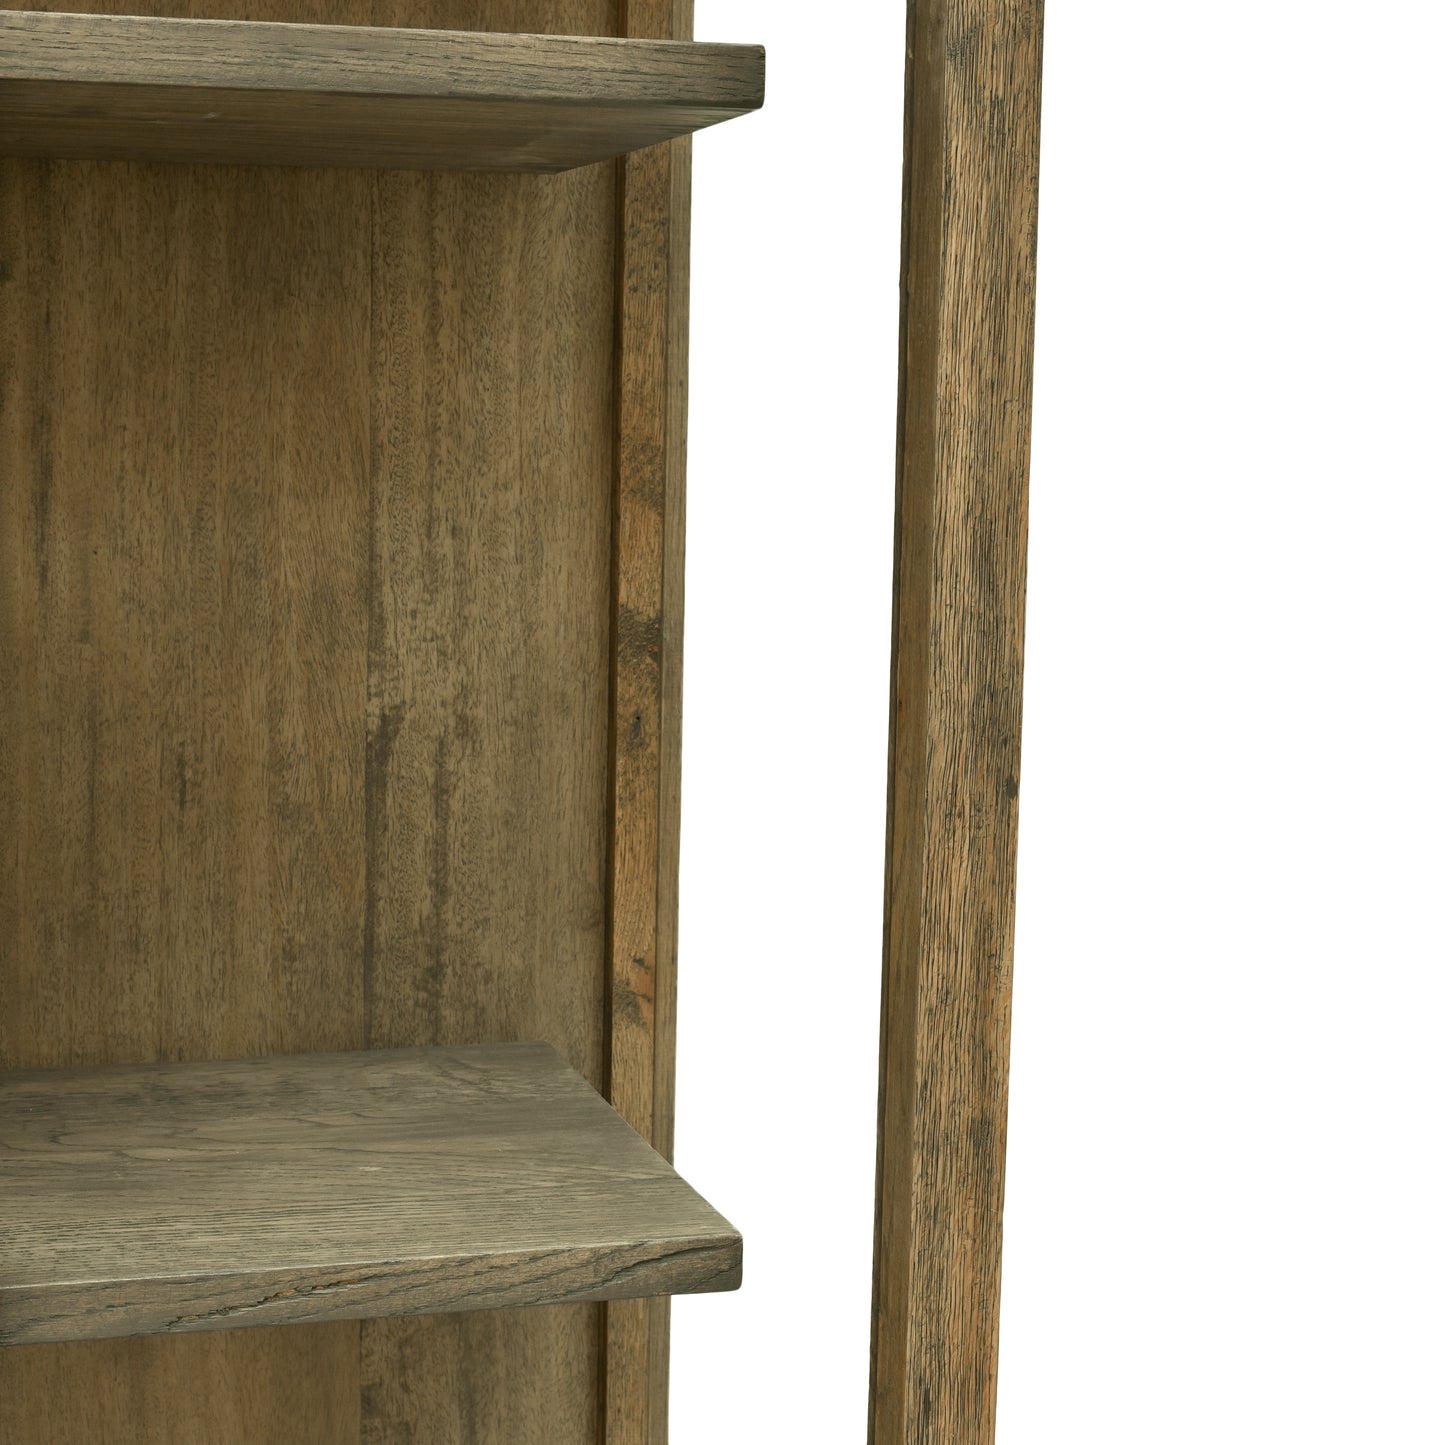 Solid wood bookshelf with Multiple Shelves / Rags-HOMENEARTH